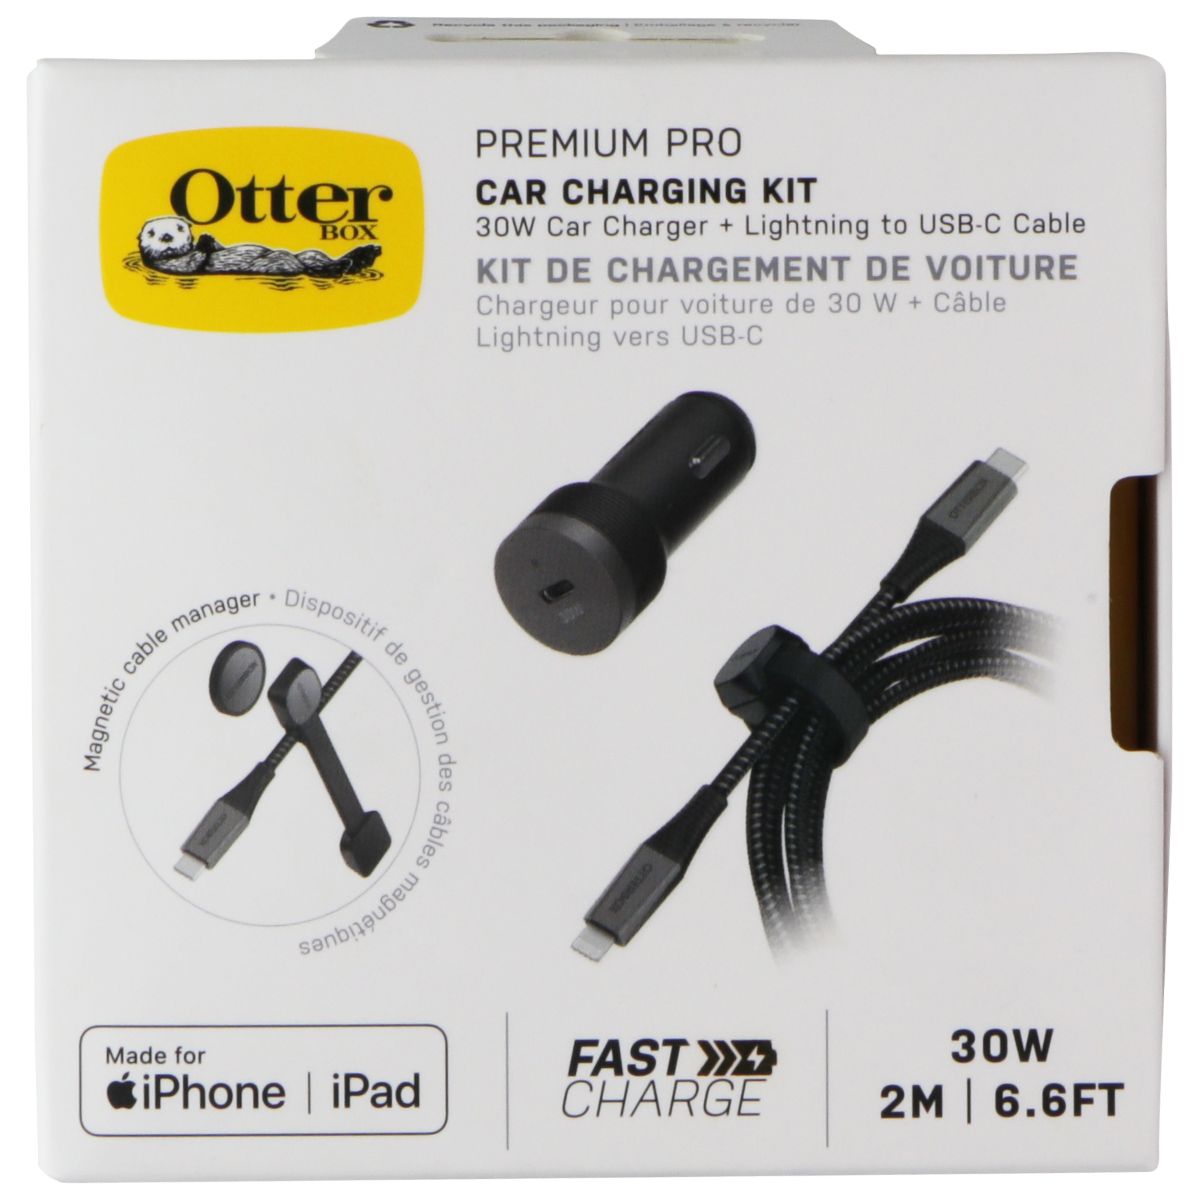 OtterBox (6.6Ft) Premium Pro 8-Pin Lightning to USB-C Car Charging Kit (30W)